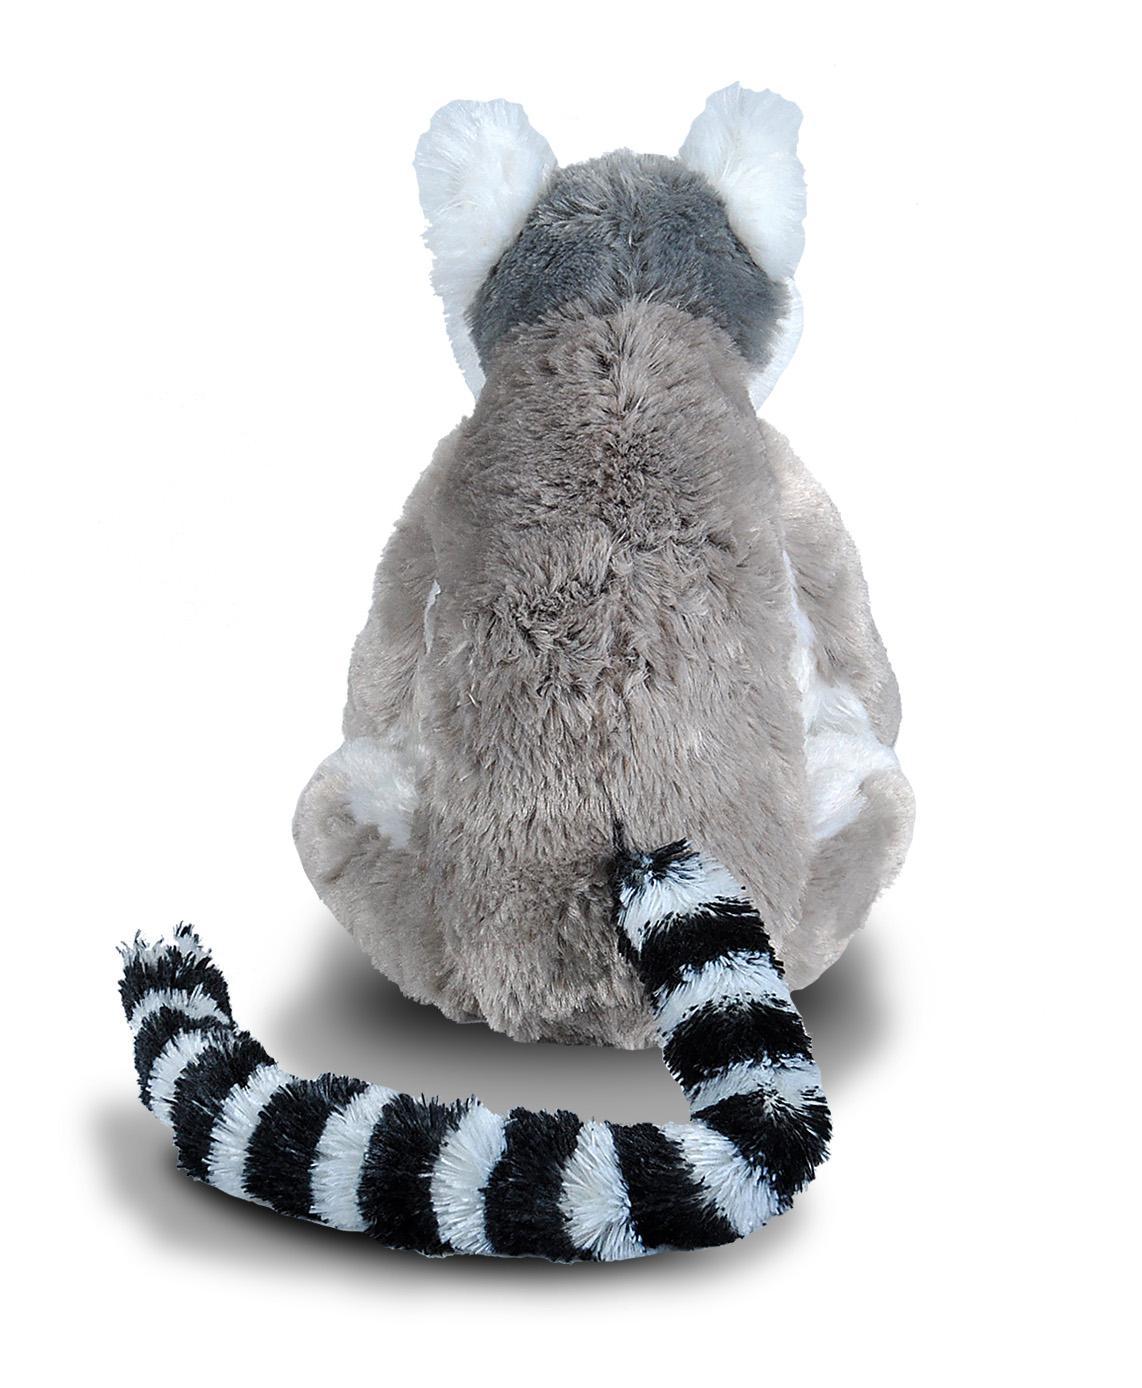 Wild Republic Ring Tailed Lemur Plush, Stuffed Animal, Plush Toy, Kids Gifts, Cuddlekins, 8 Inches